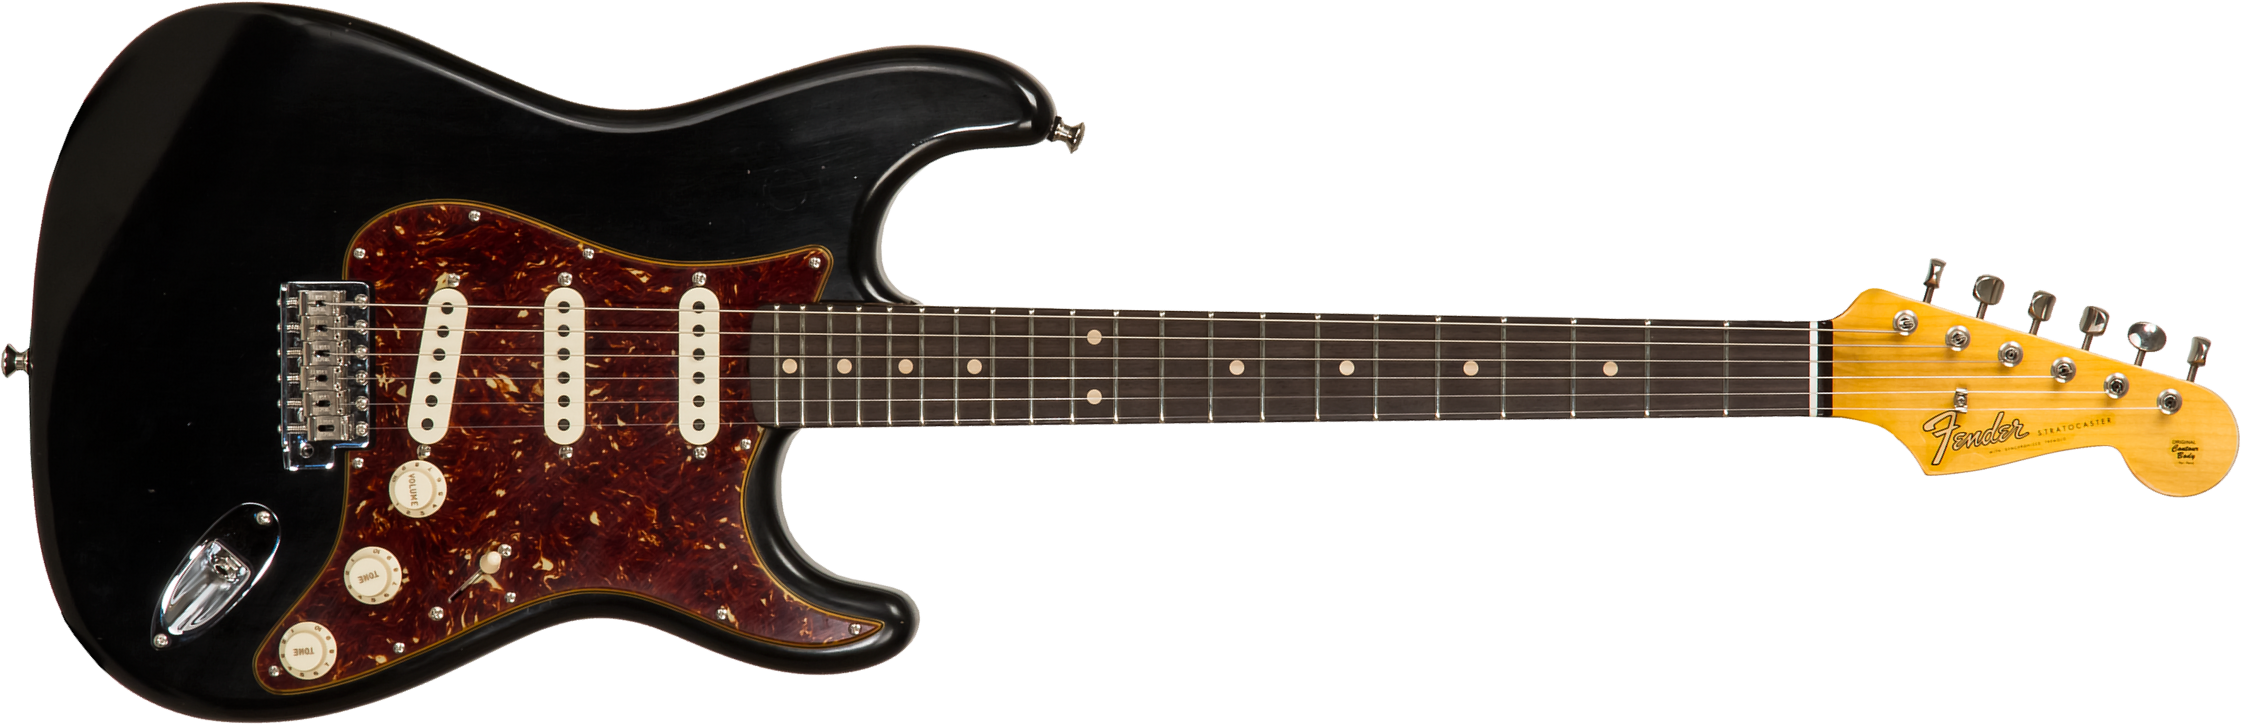 Fender Custom Shop Strat Postmodern 3s Trem Rw #xn13616 - Journeyman Relic Aged Black - Guitare Électrique Forme Str - Main picture